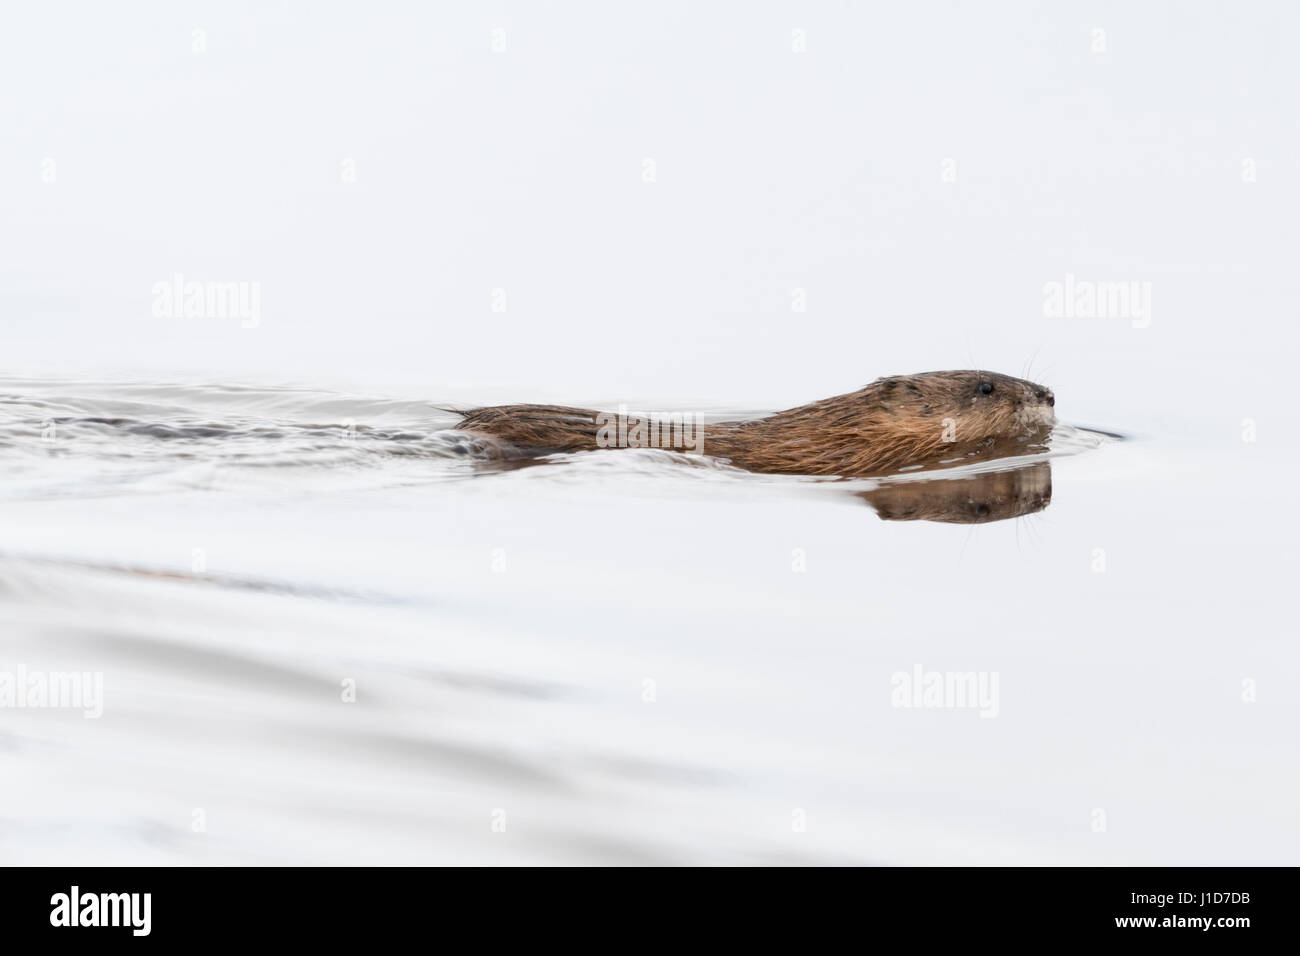 Muskrat / Bisamratte ( Ondatra zibethicus ) in winter, swimming through a body of water, Grand Teton National Park, Wyoming, USA. Stock Photo